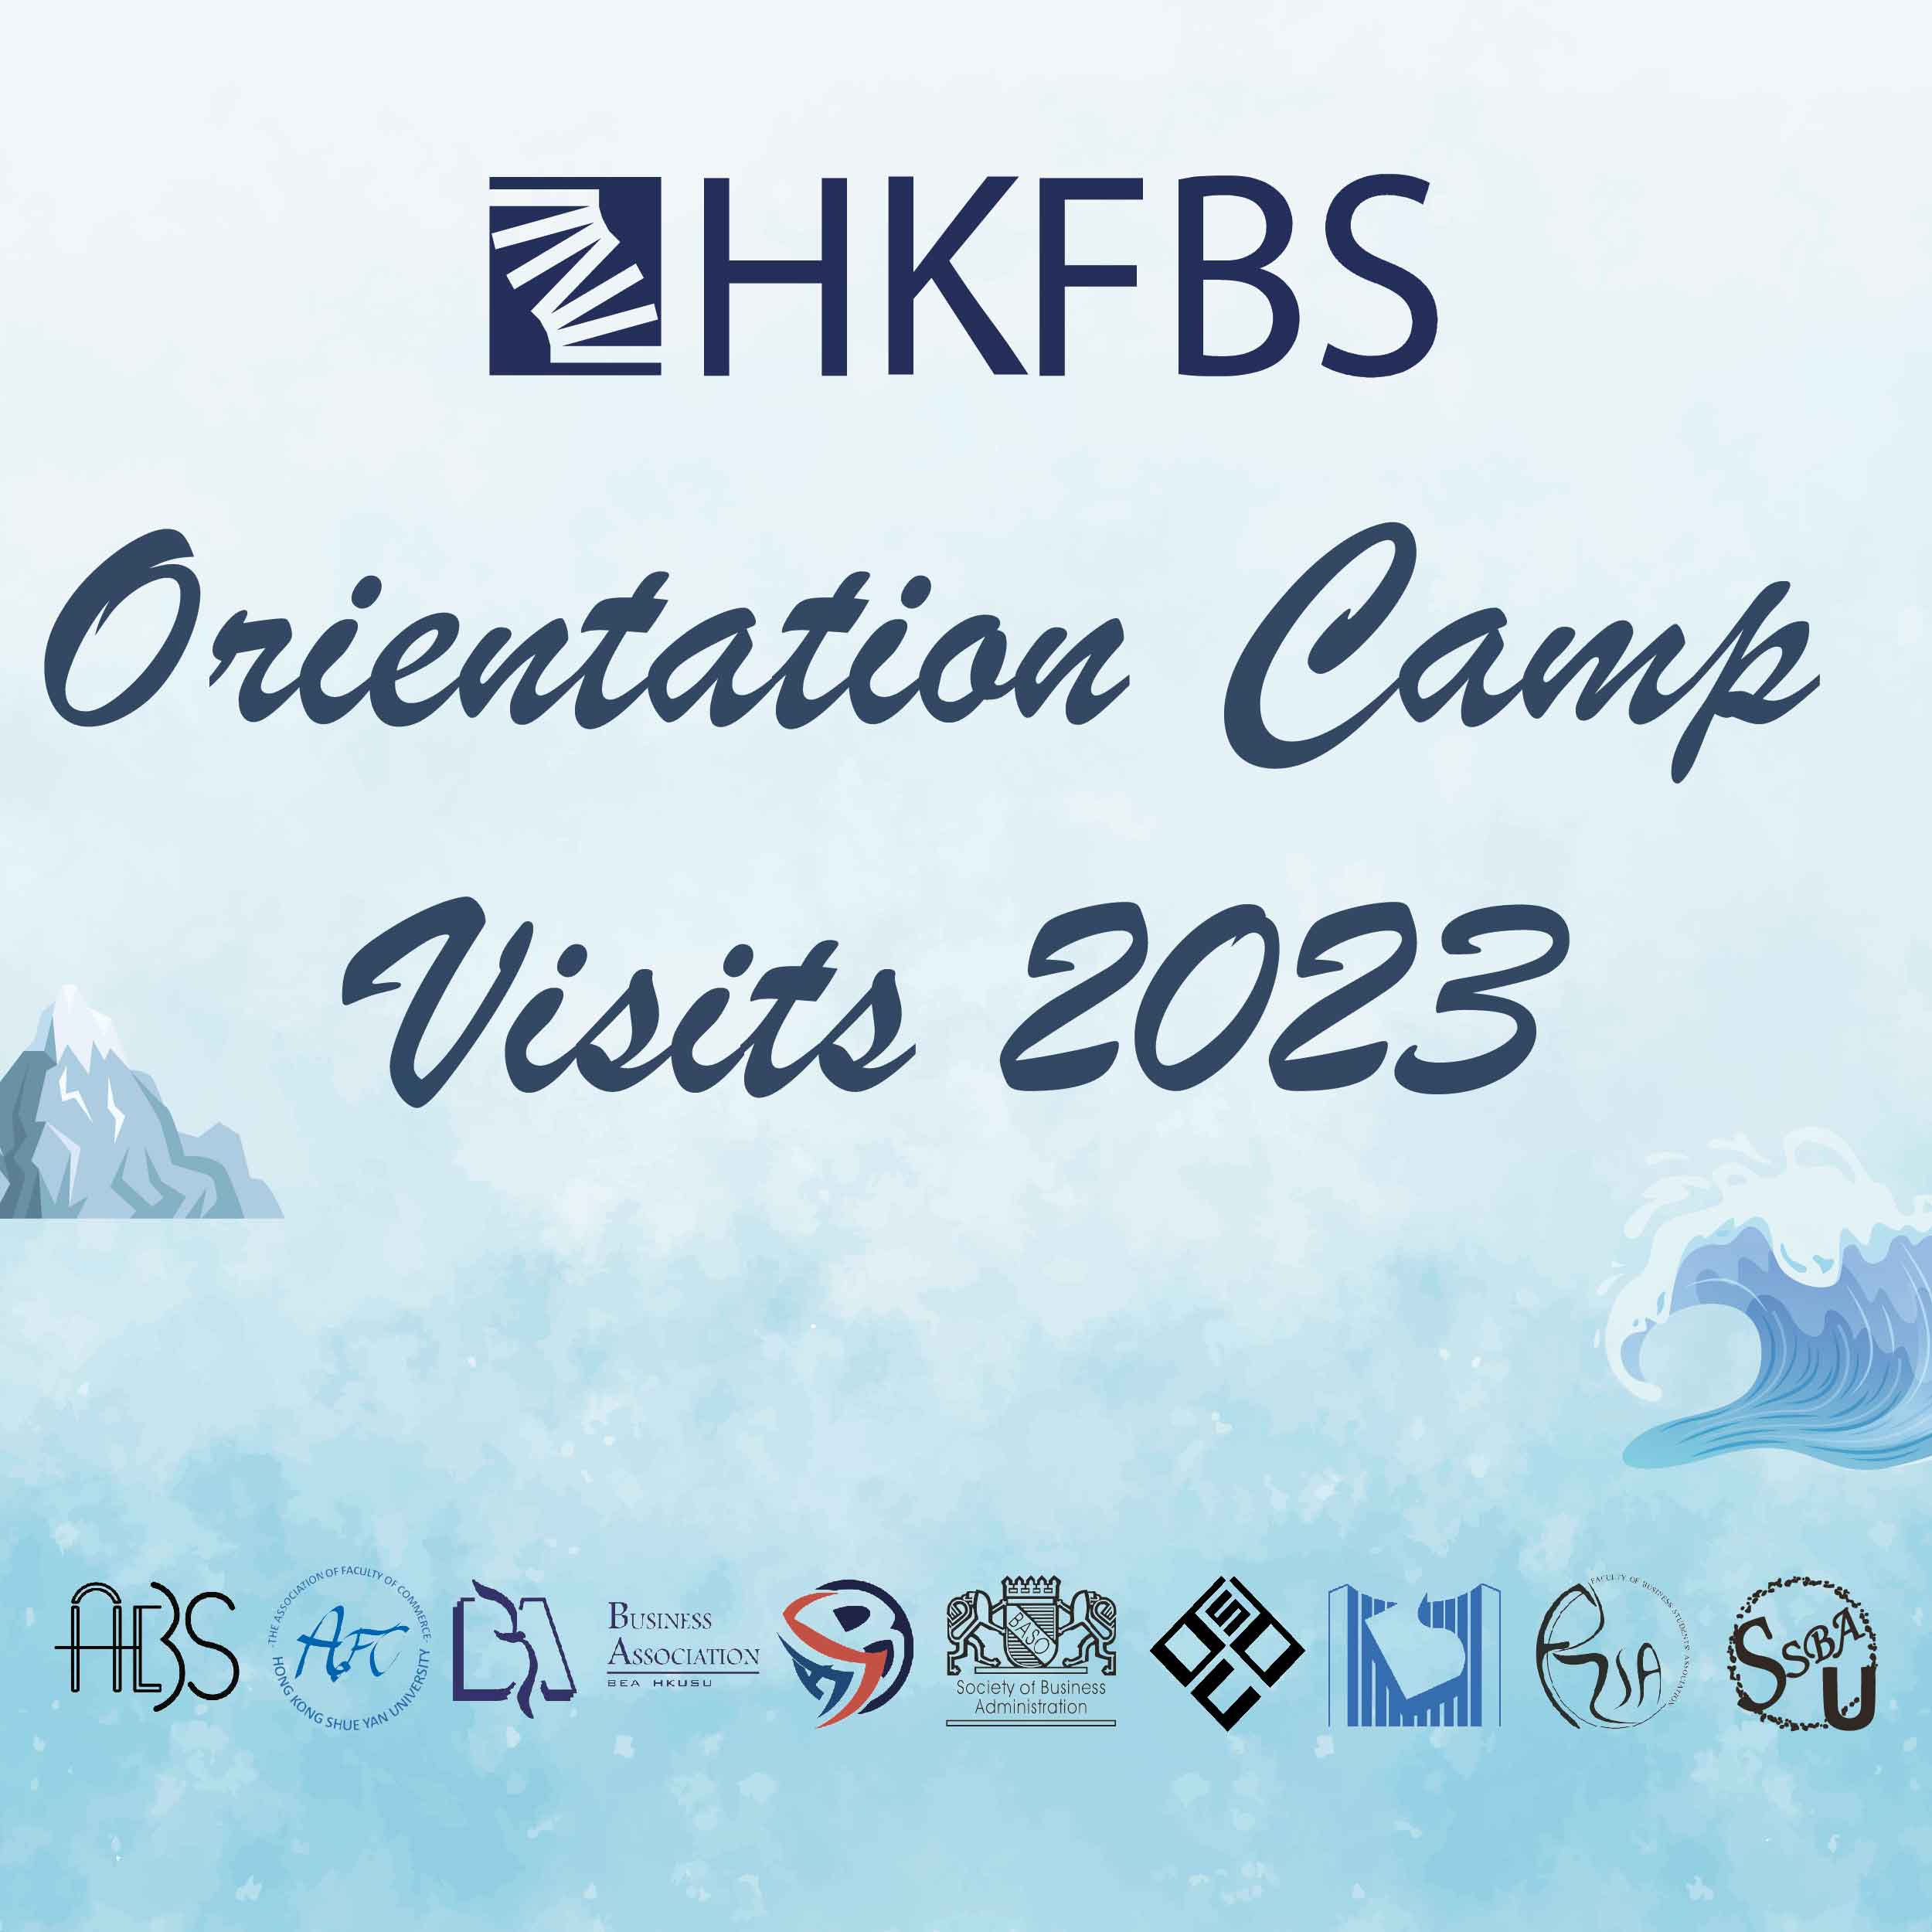 Orientation Camp Visits 2023